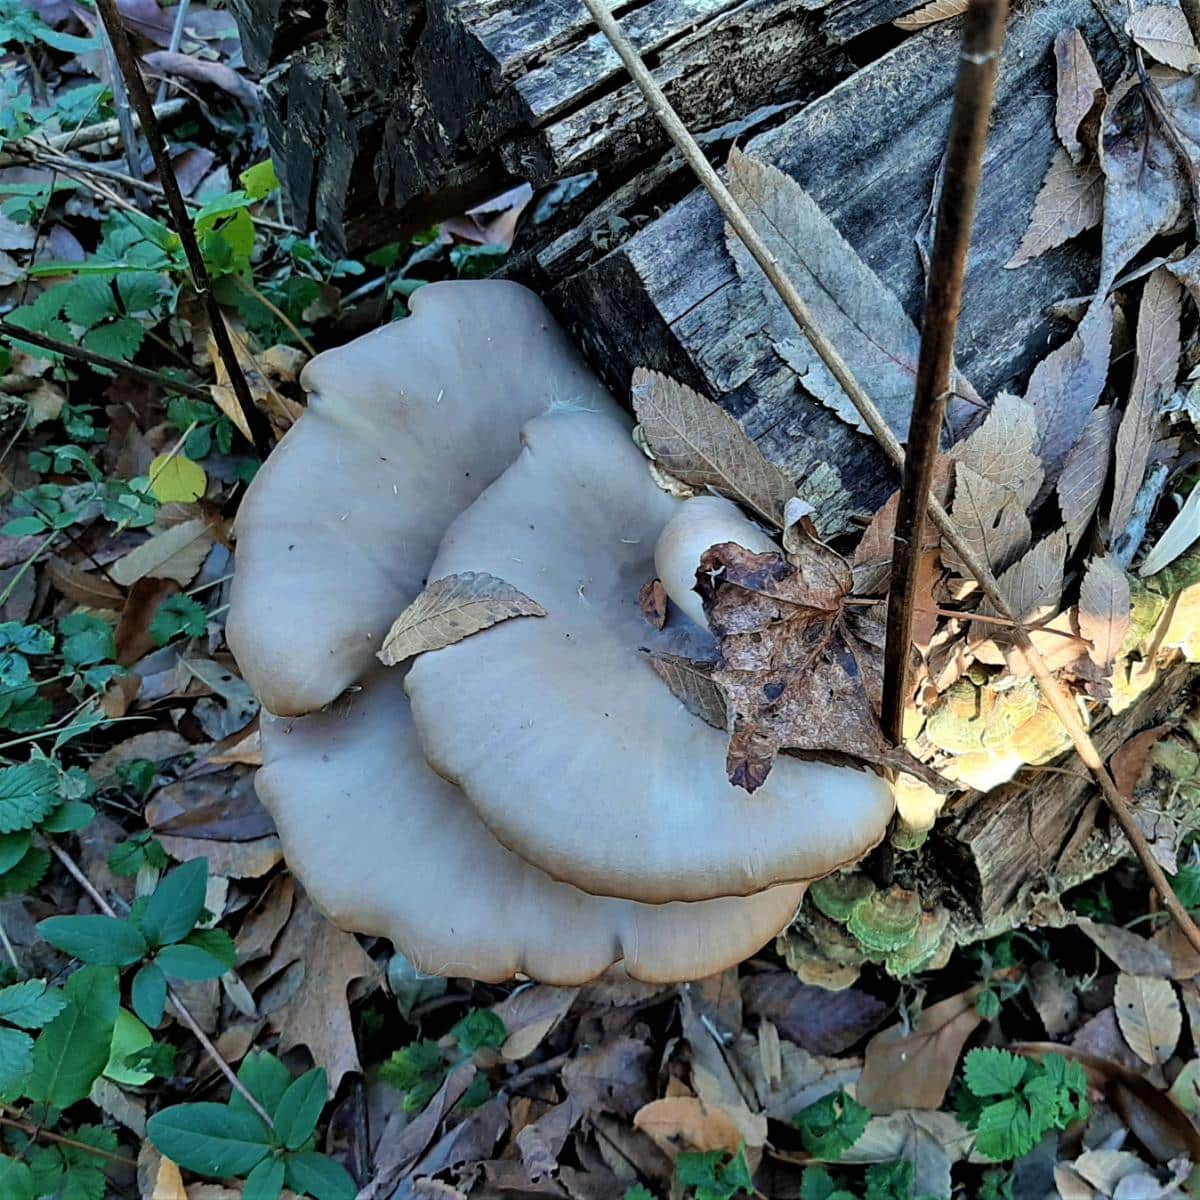 fan shaped caps of oyster mushroom